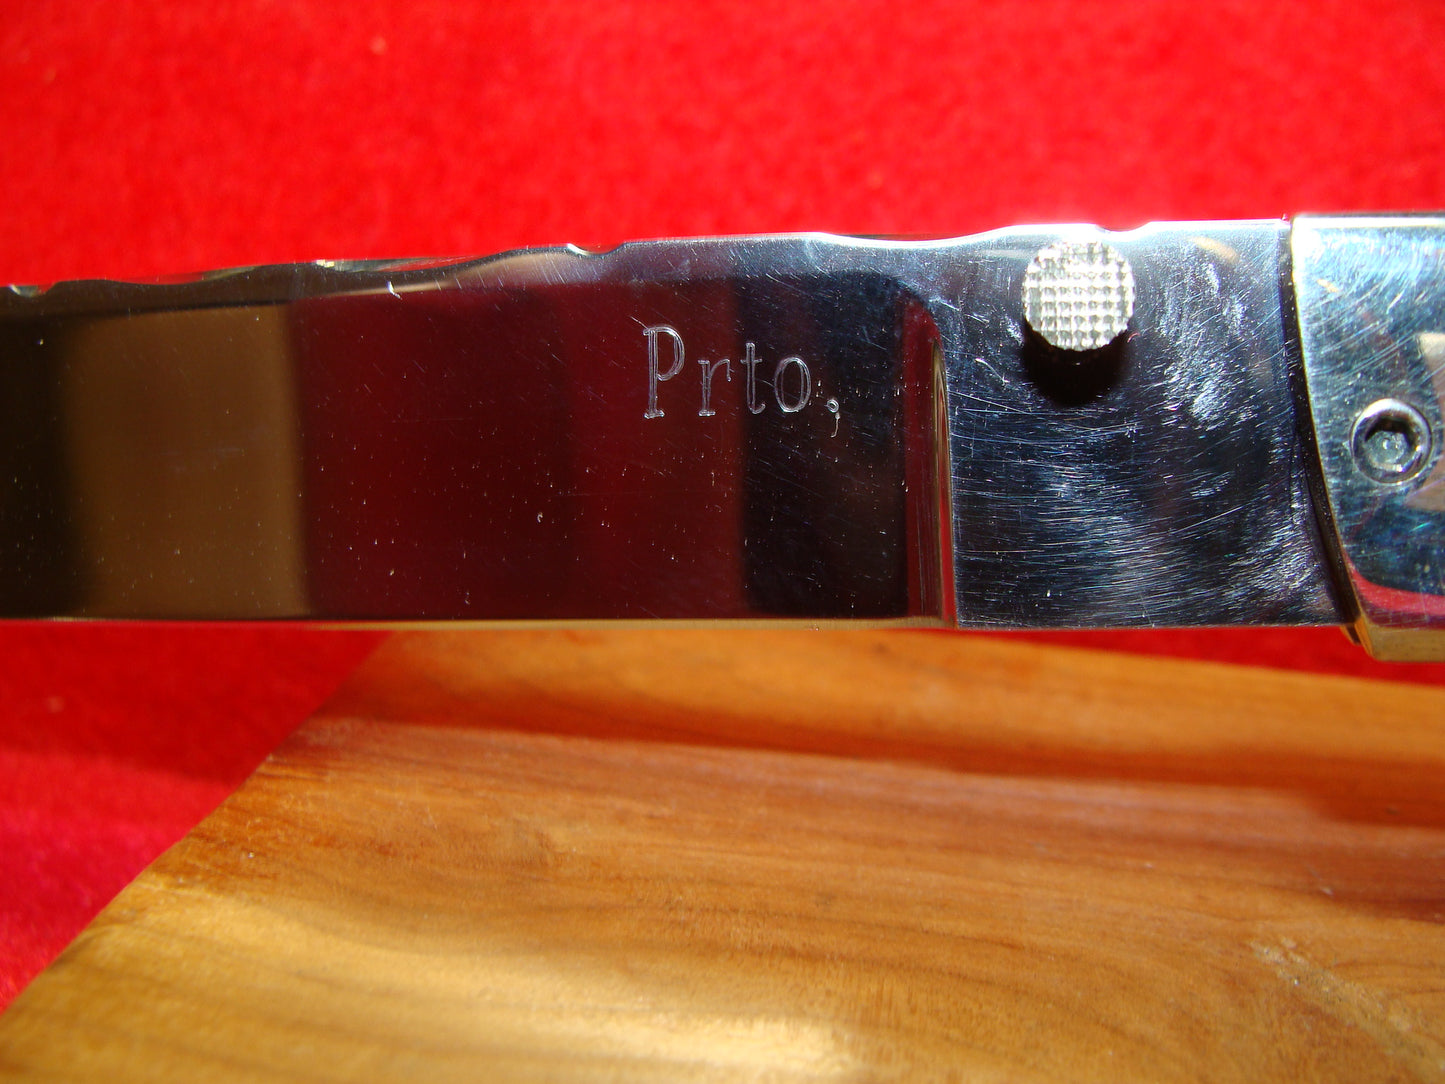 B.C.K. PROTO BUTTON RELEASE CUSTOM AUTOMATIC KNIFE SMOOTH WHITE BONE HANDLES